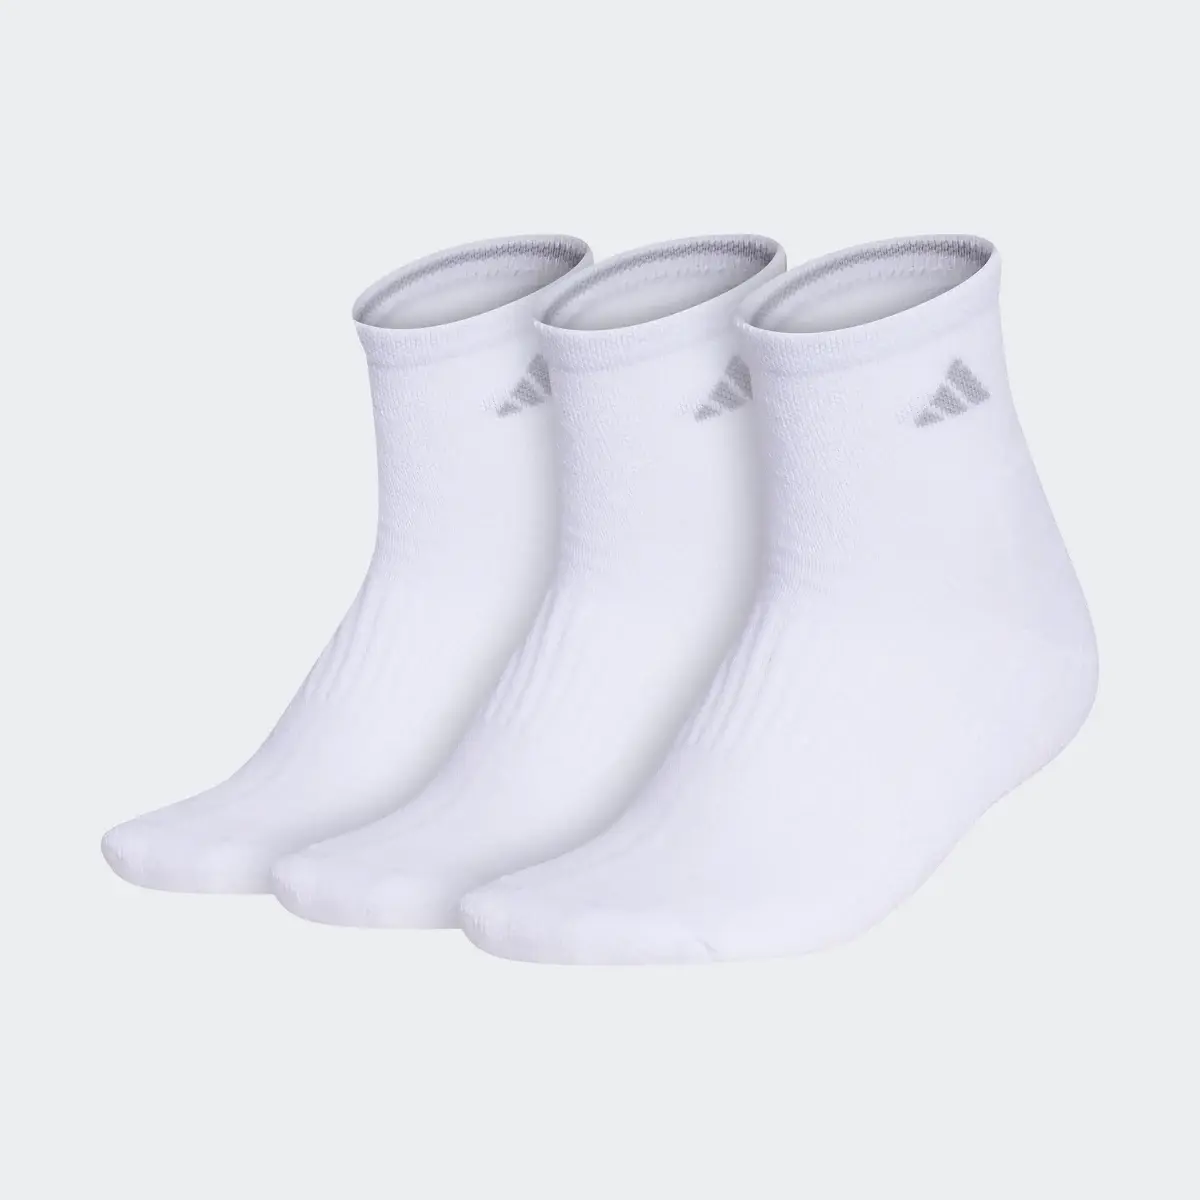 Adidas Cushioned Quarter Socks 3 Pairs. 2